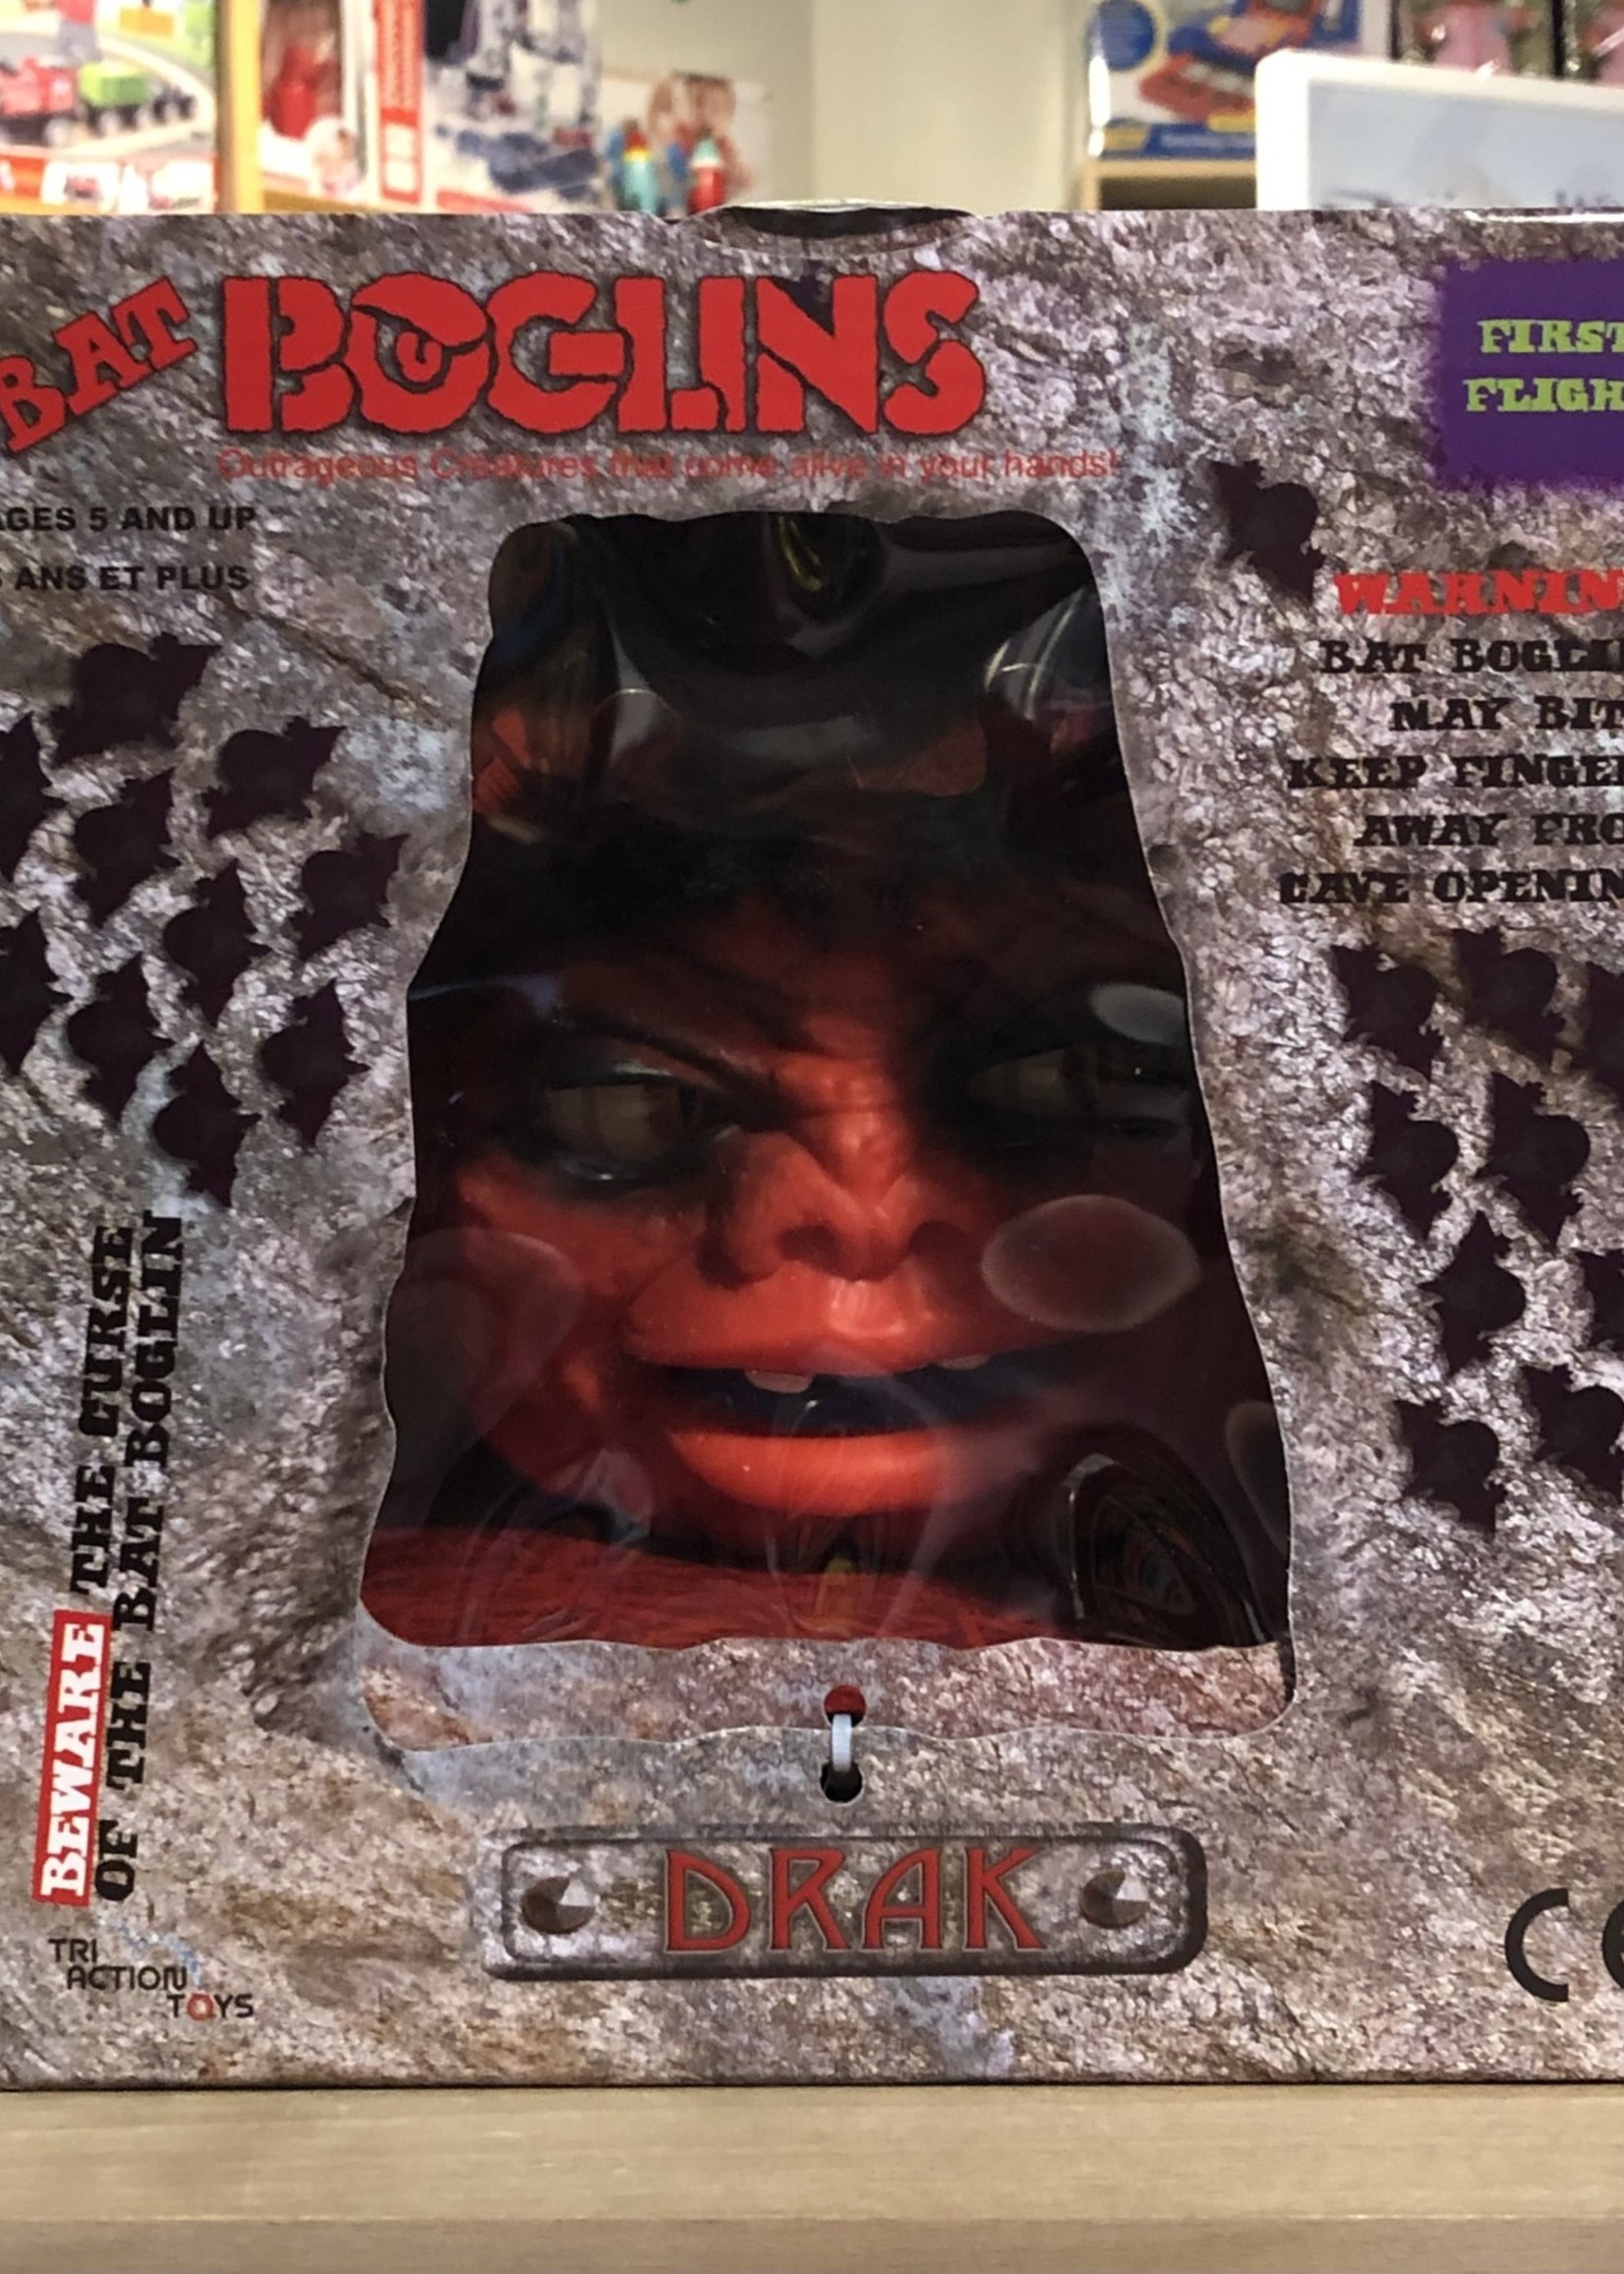 Boglins Boglins - Bat King Drak